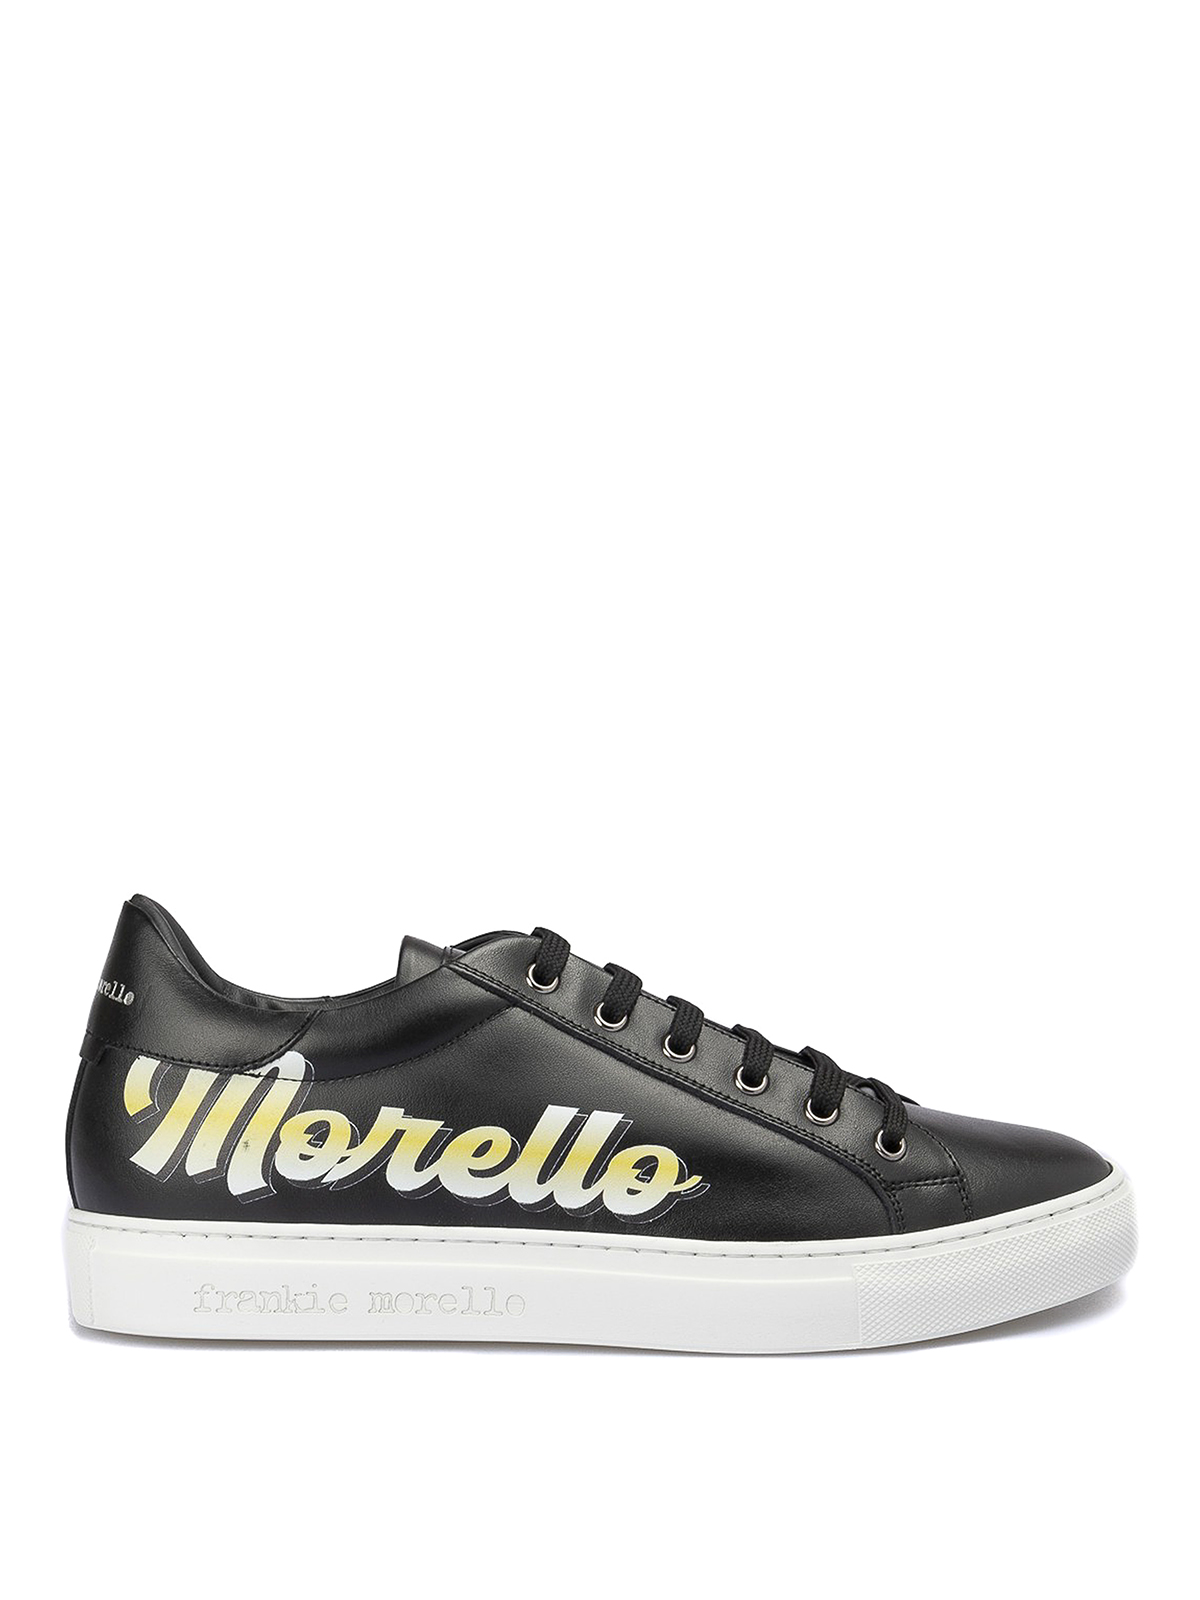 Correspondentie Verwachting vlinder Trainers Frankie Morello - Logo print black leather sneakers - 9105B